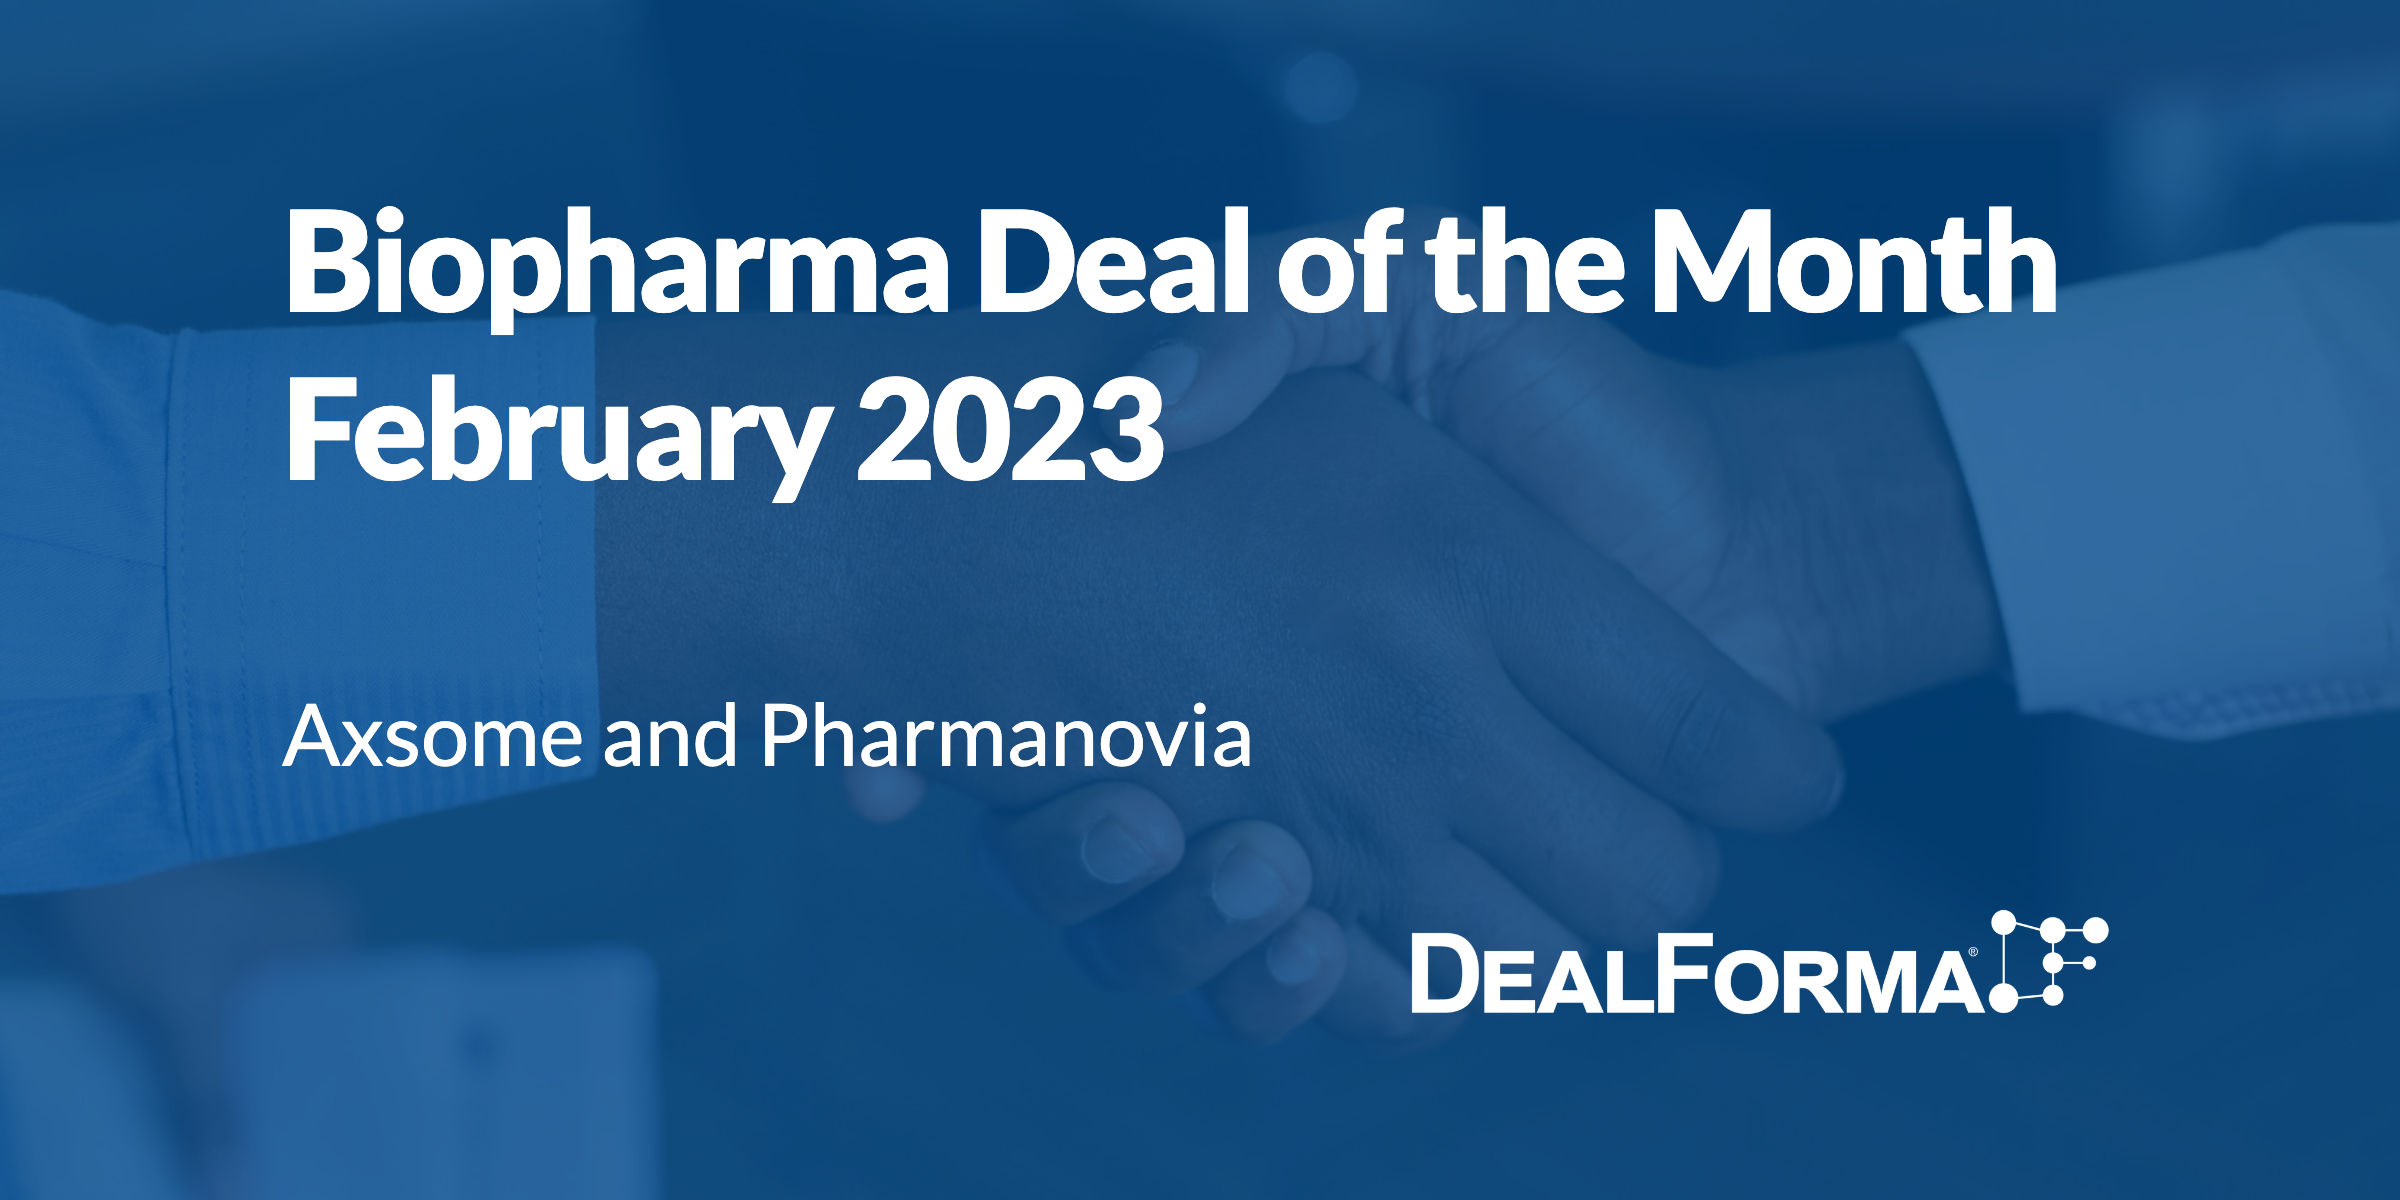 Top biopharma deal upfront Feb. 2023